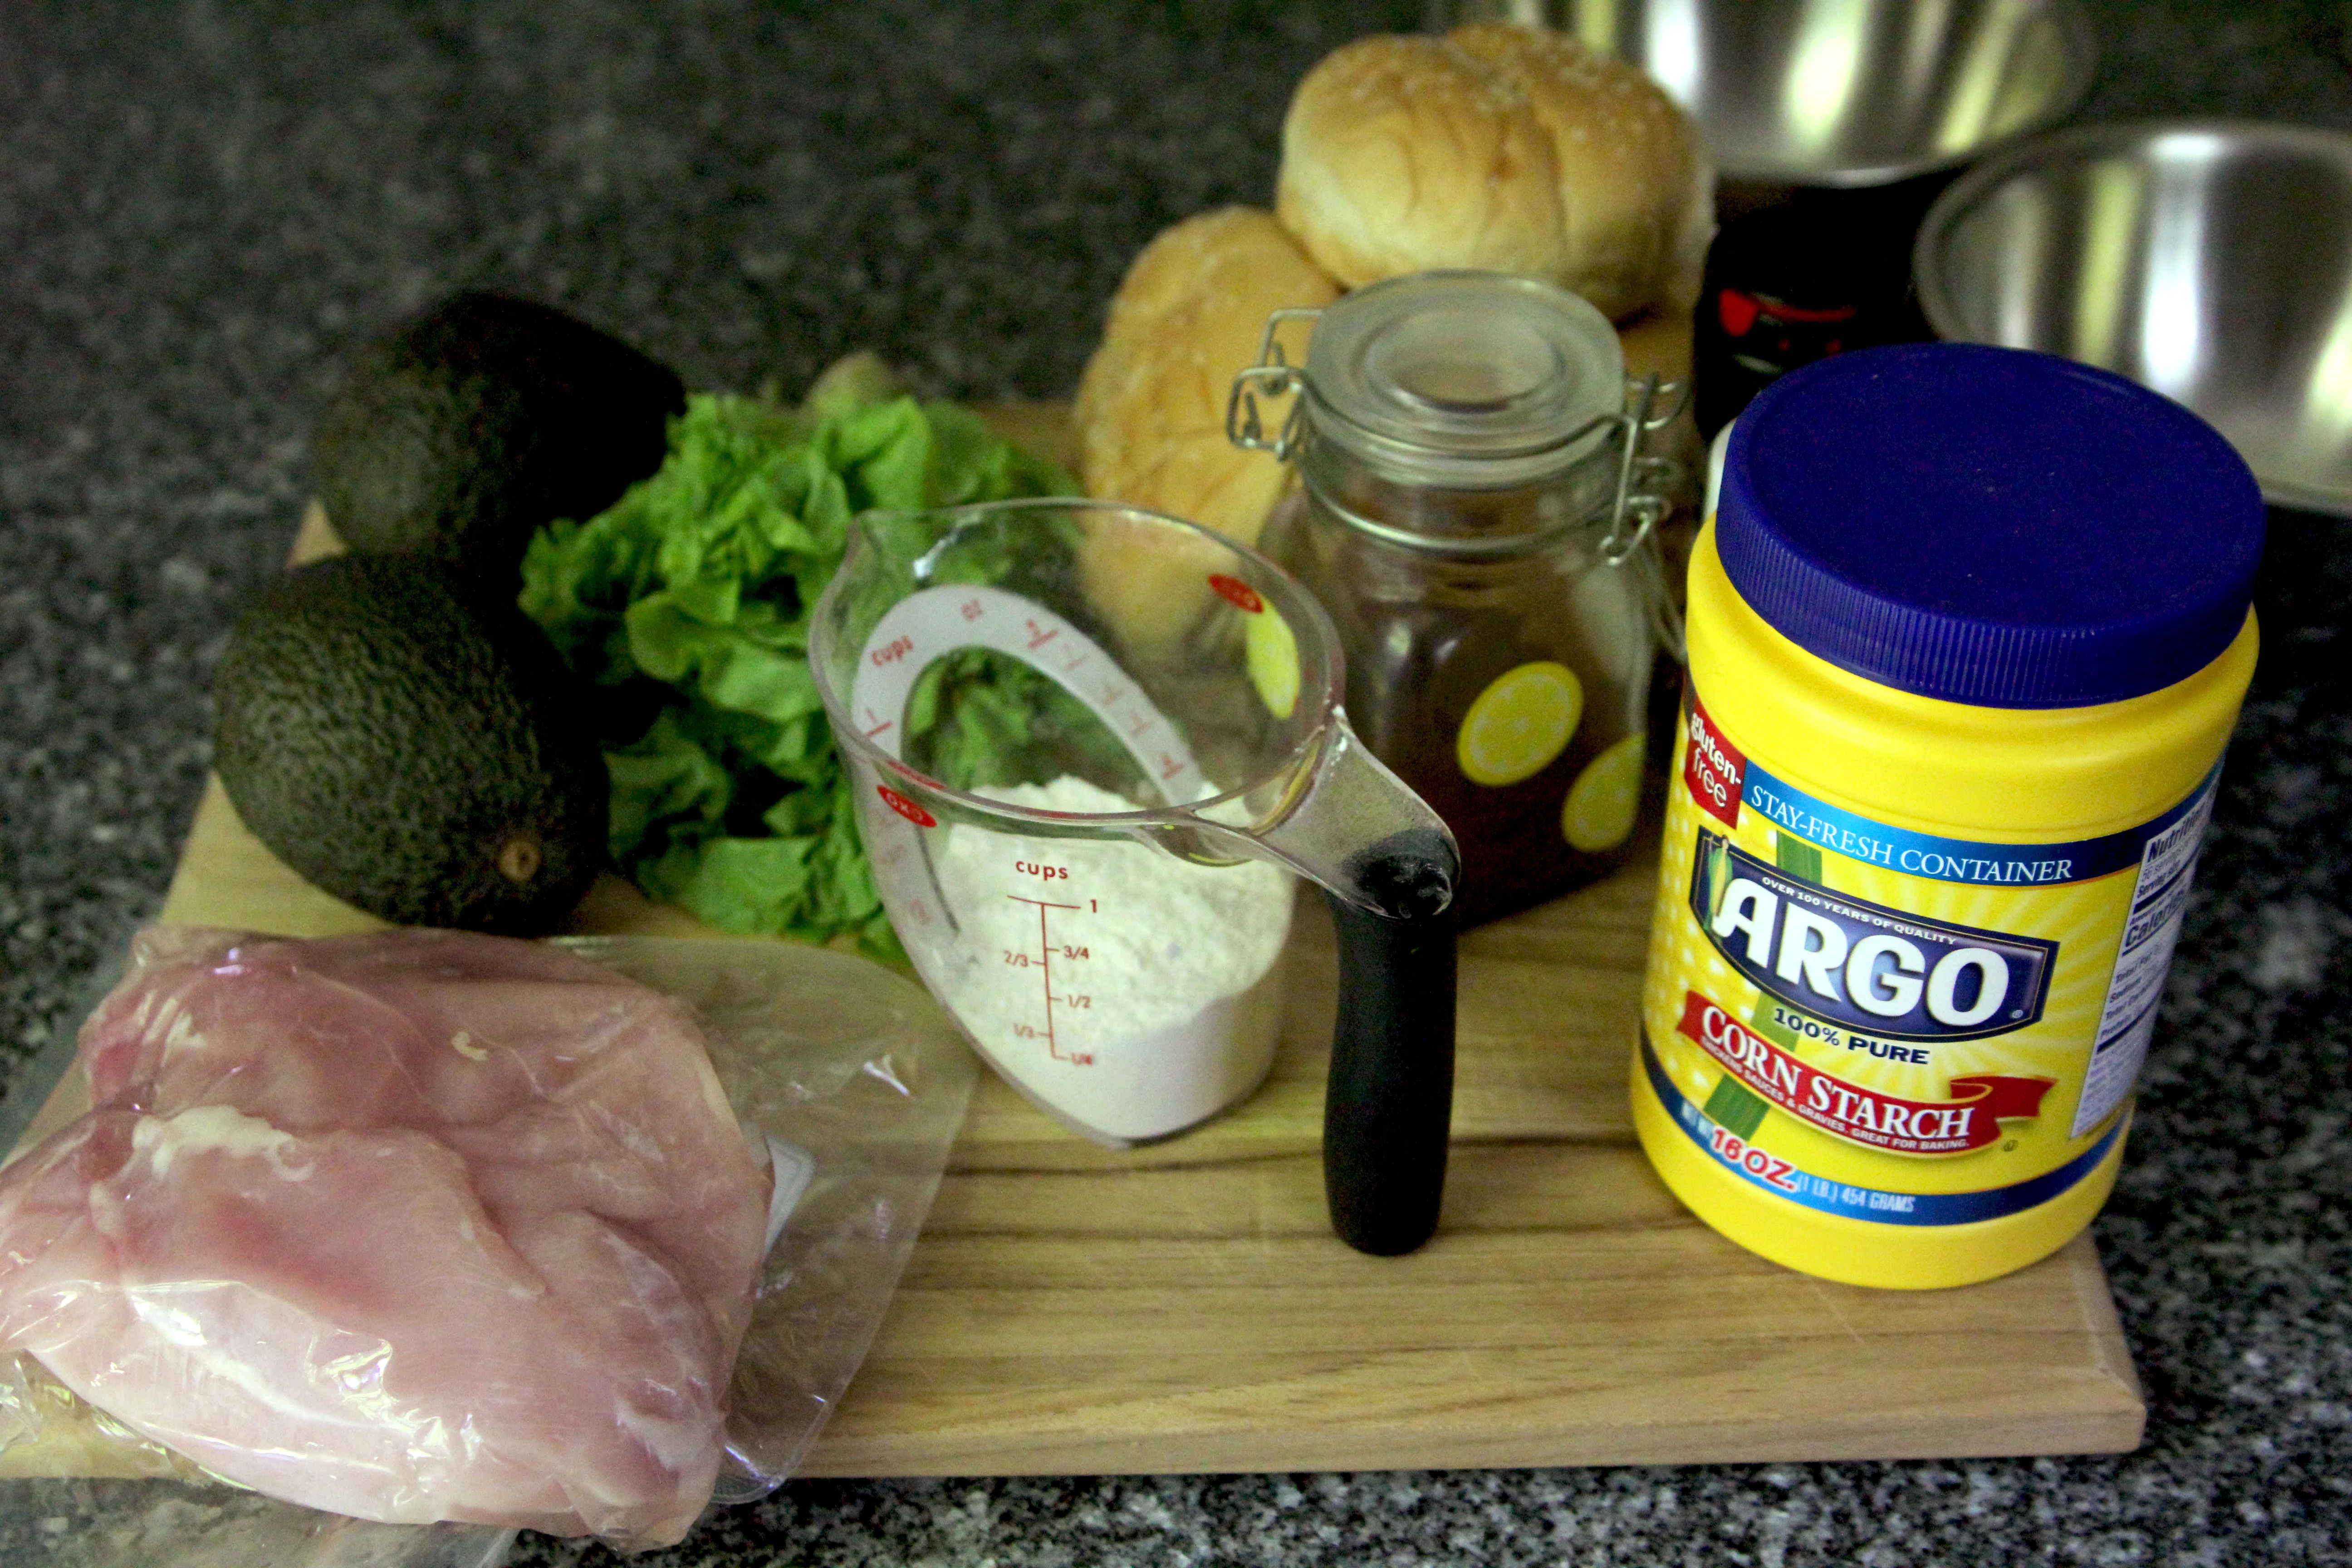 Ingredients for a spicy chicken sandwich